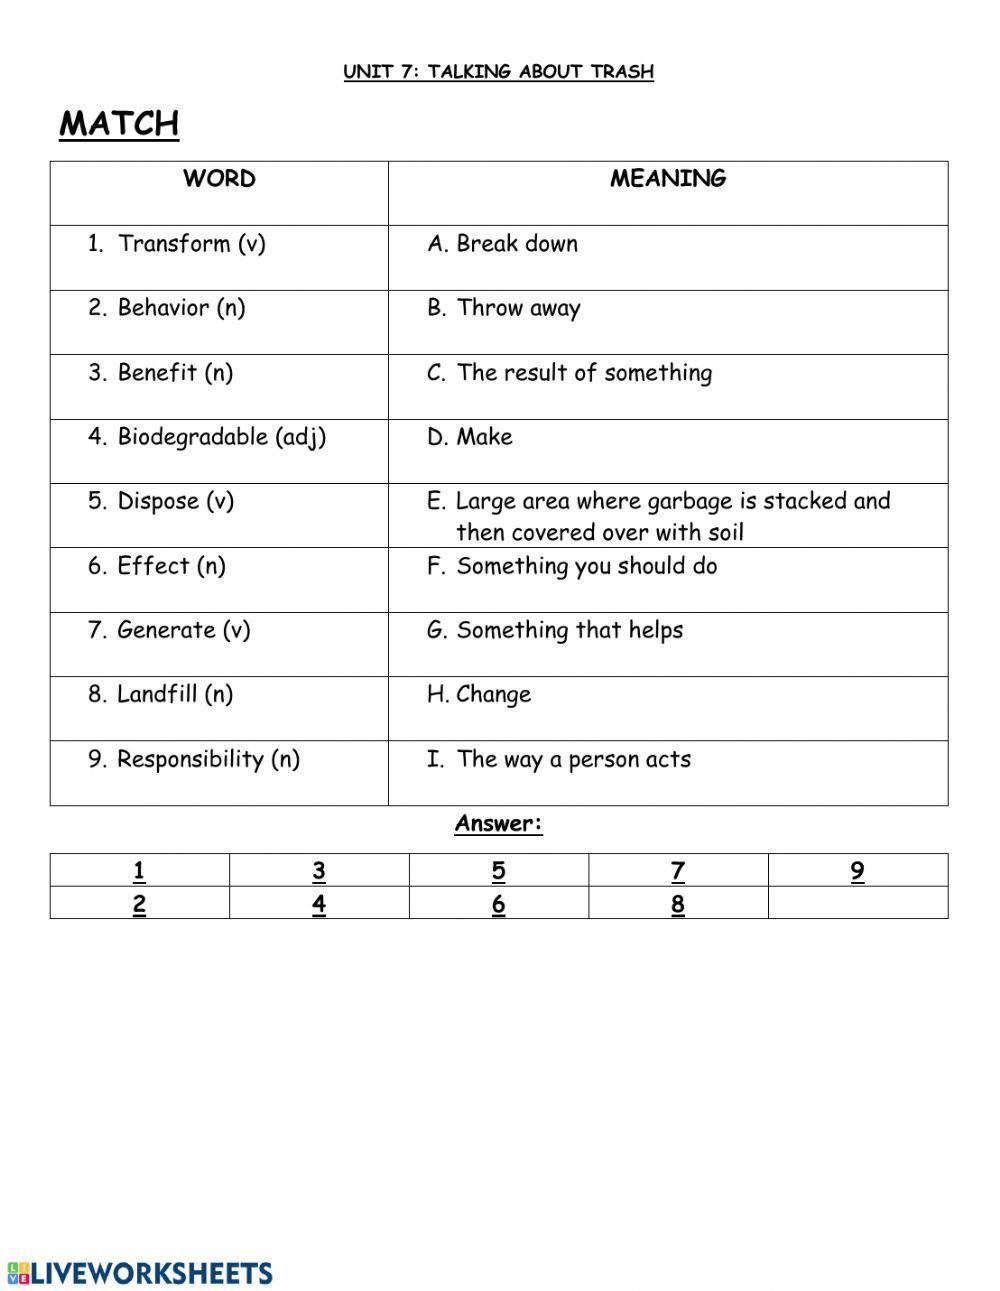 Vocabulary Unit 7 Part 2: Talking About Trash worksheet